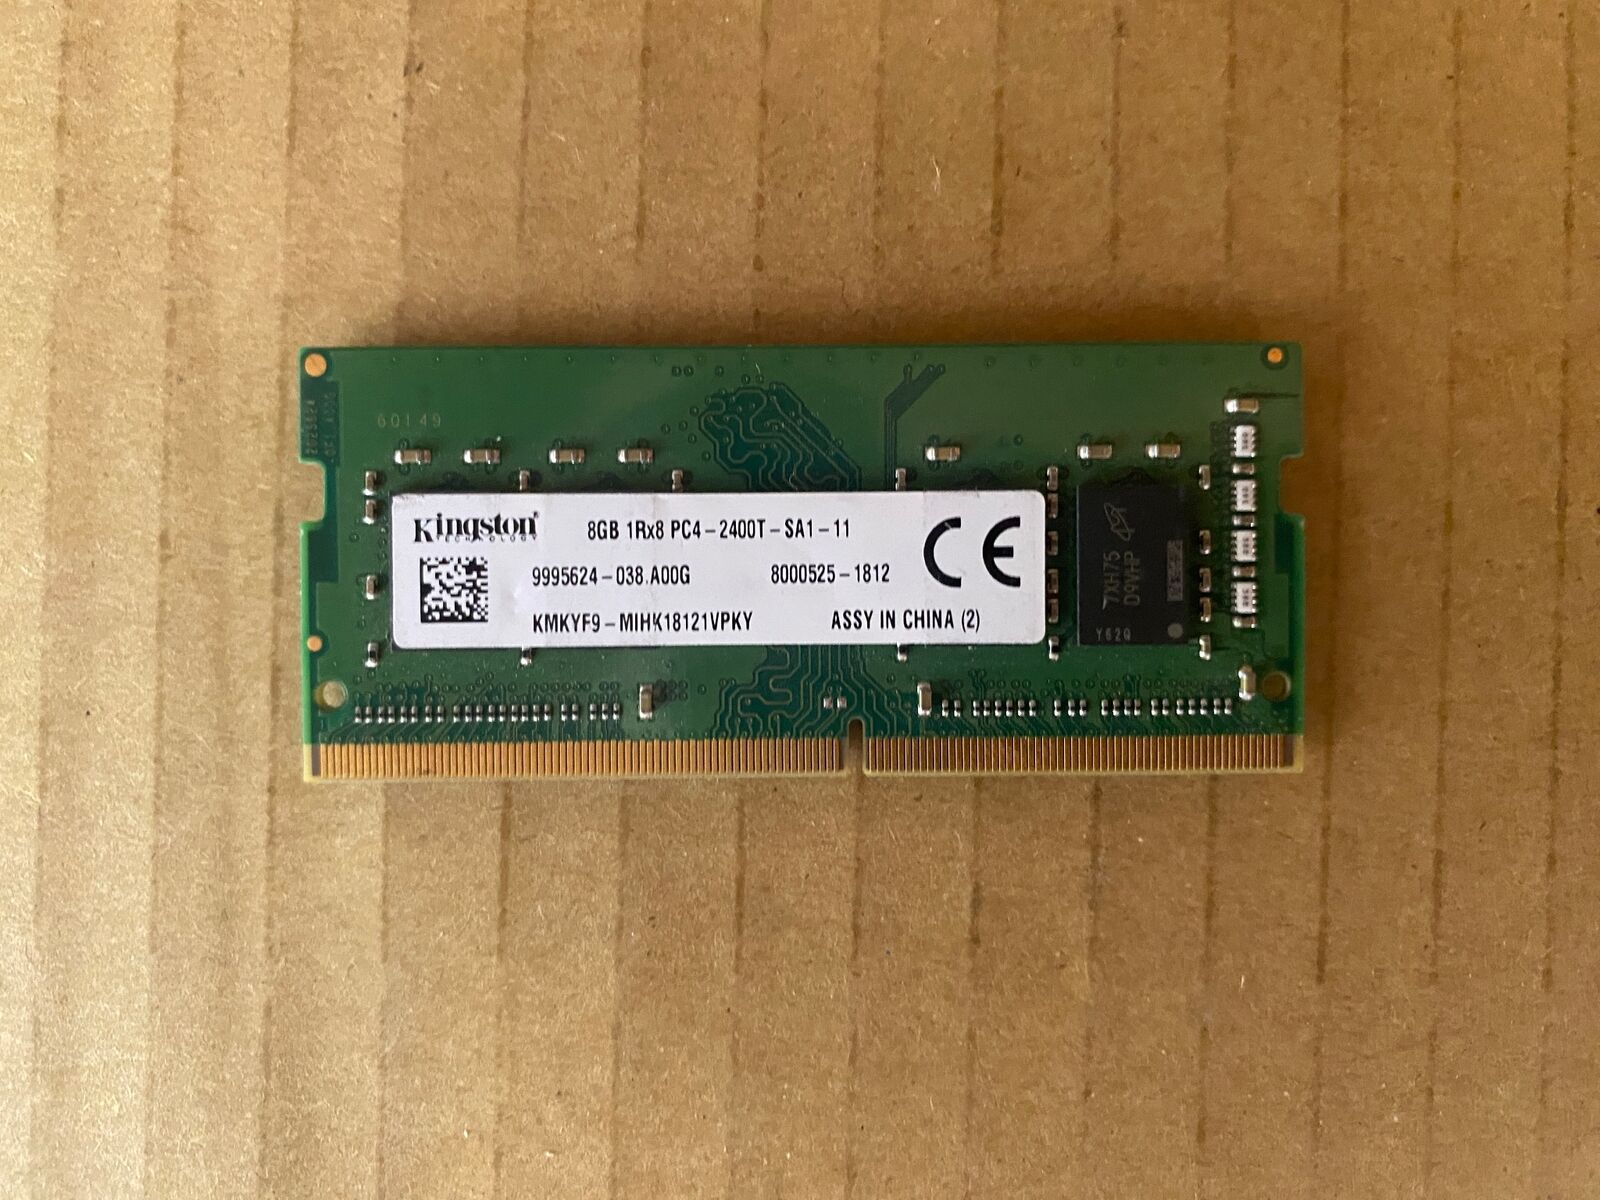 KINGSTON 8GB (1X8GB) 1RX8 PC4-2400T DDR4 SODIMM LAPTOP MEMORY KMKYF9-MIH V5-1(6)